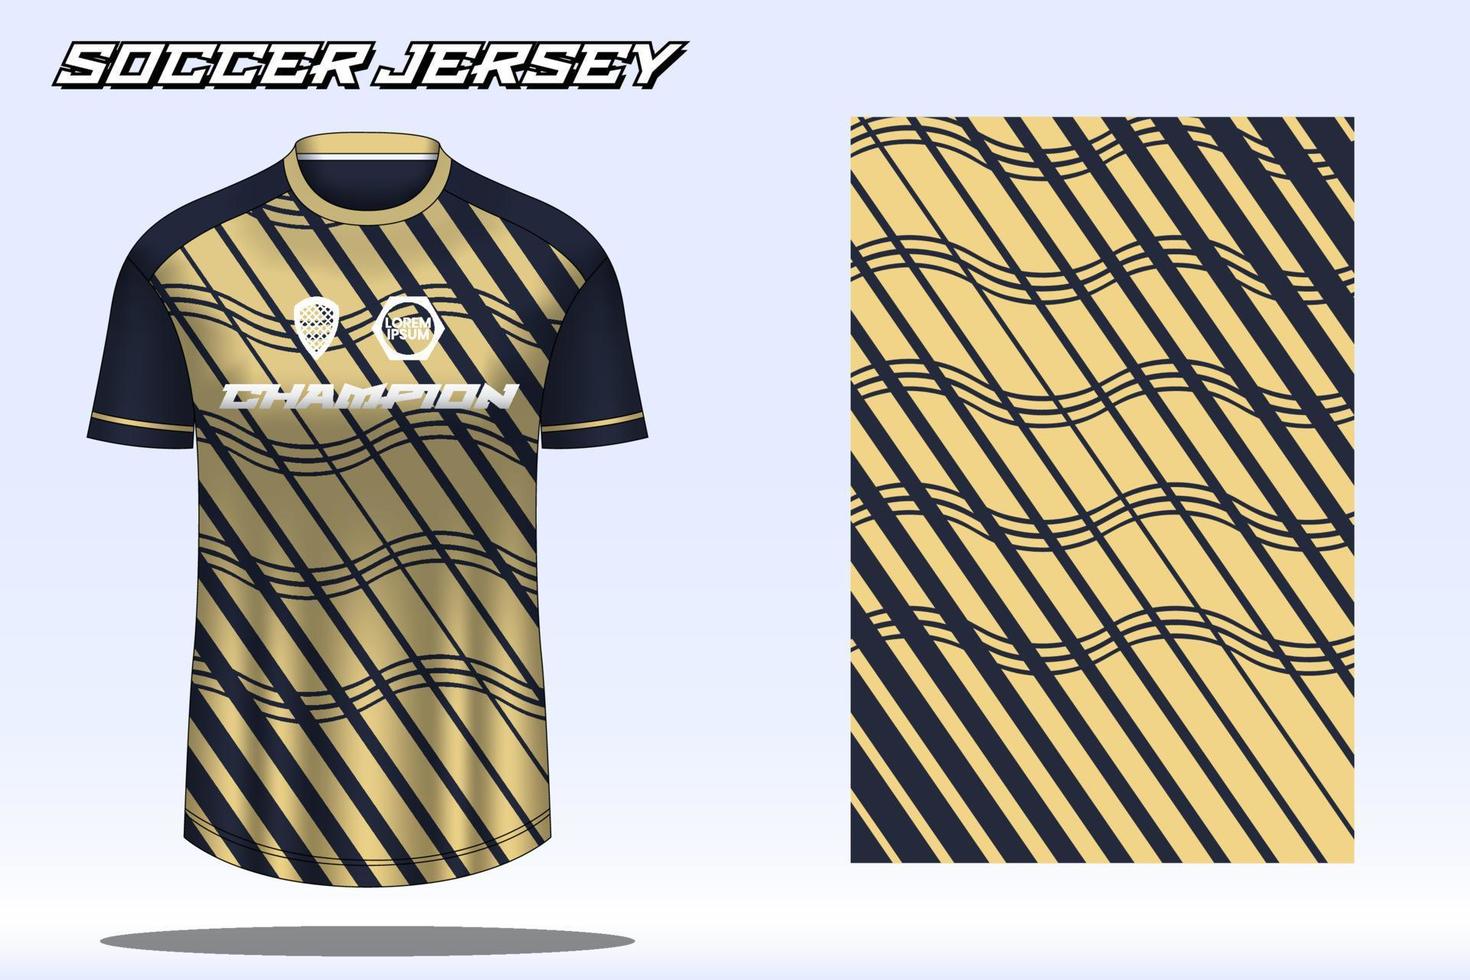 Soccer jersey sport t-shirt design mockup for football club 22 vector